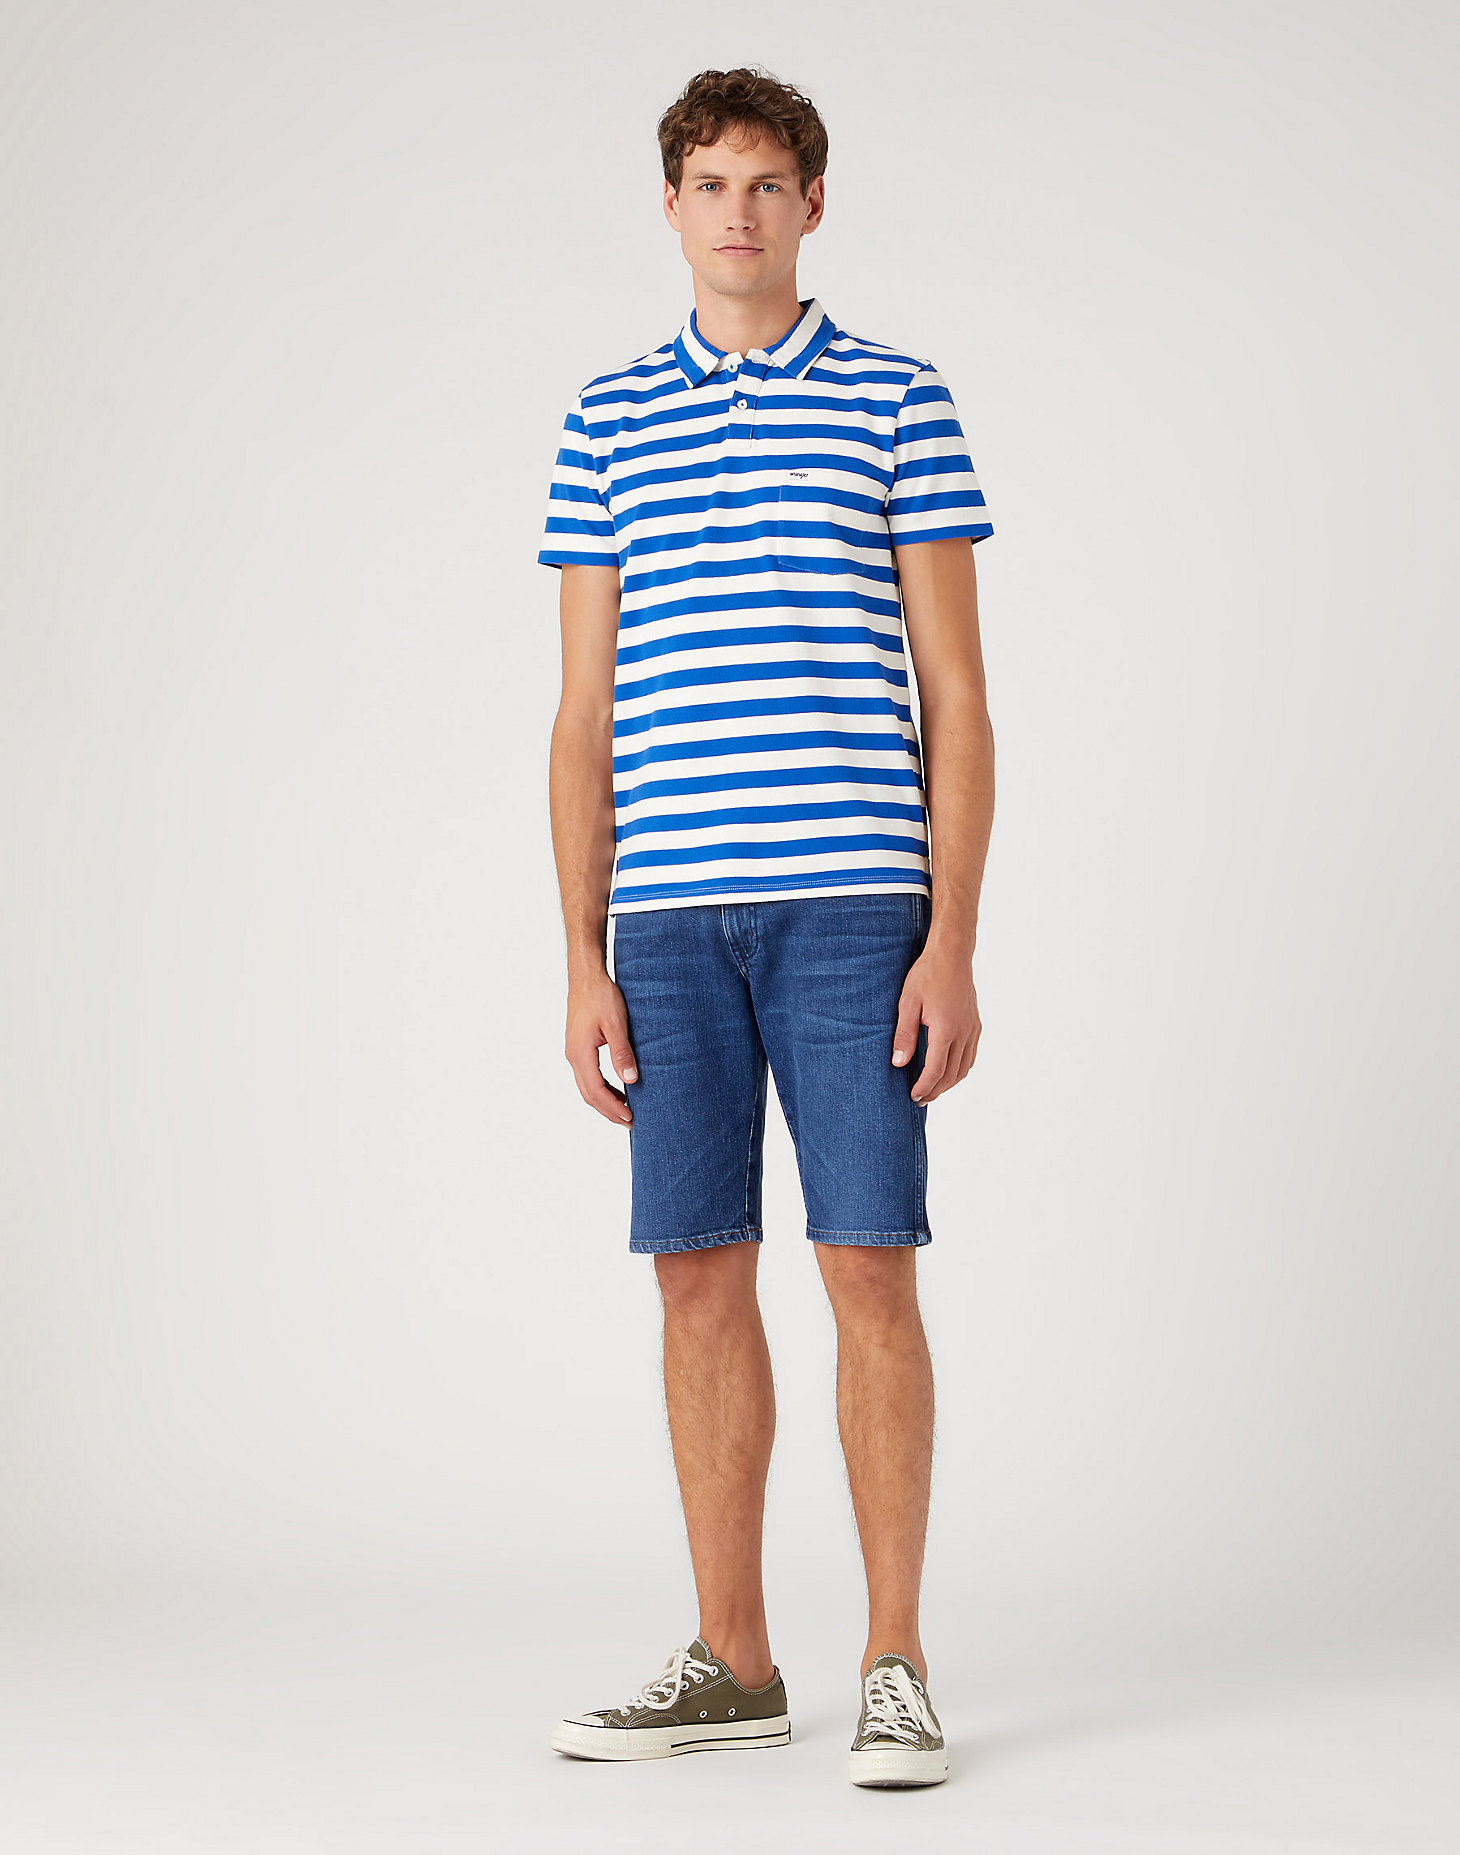 Stripe Polo Shirt in Wrangler Blue alternative view 1